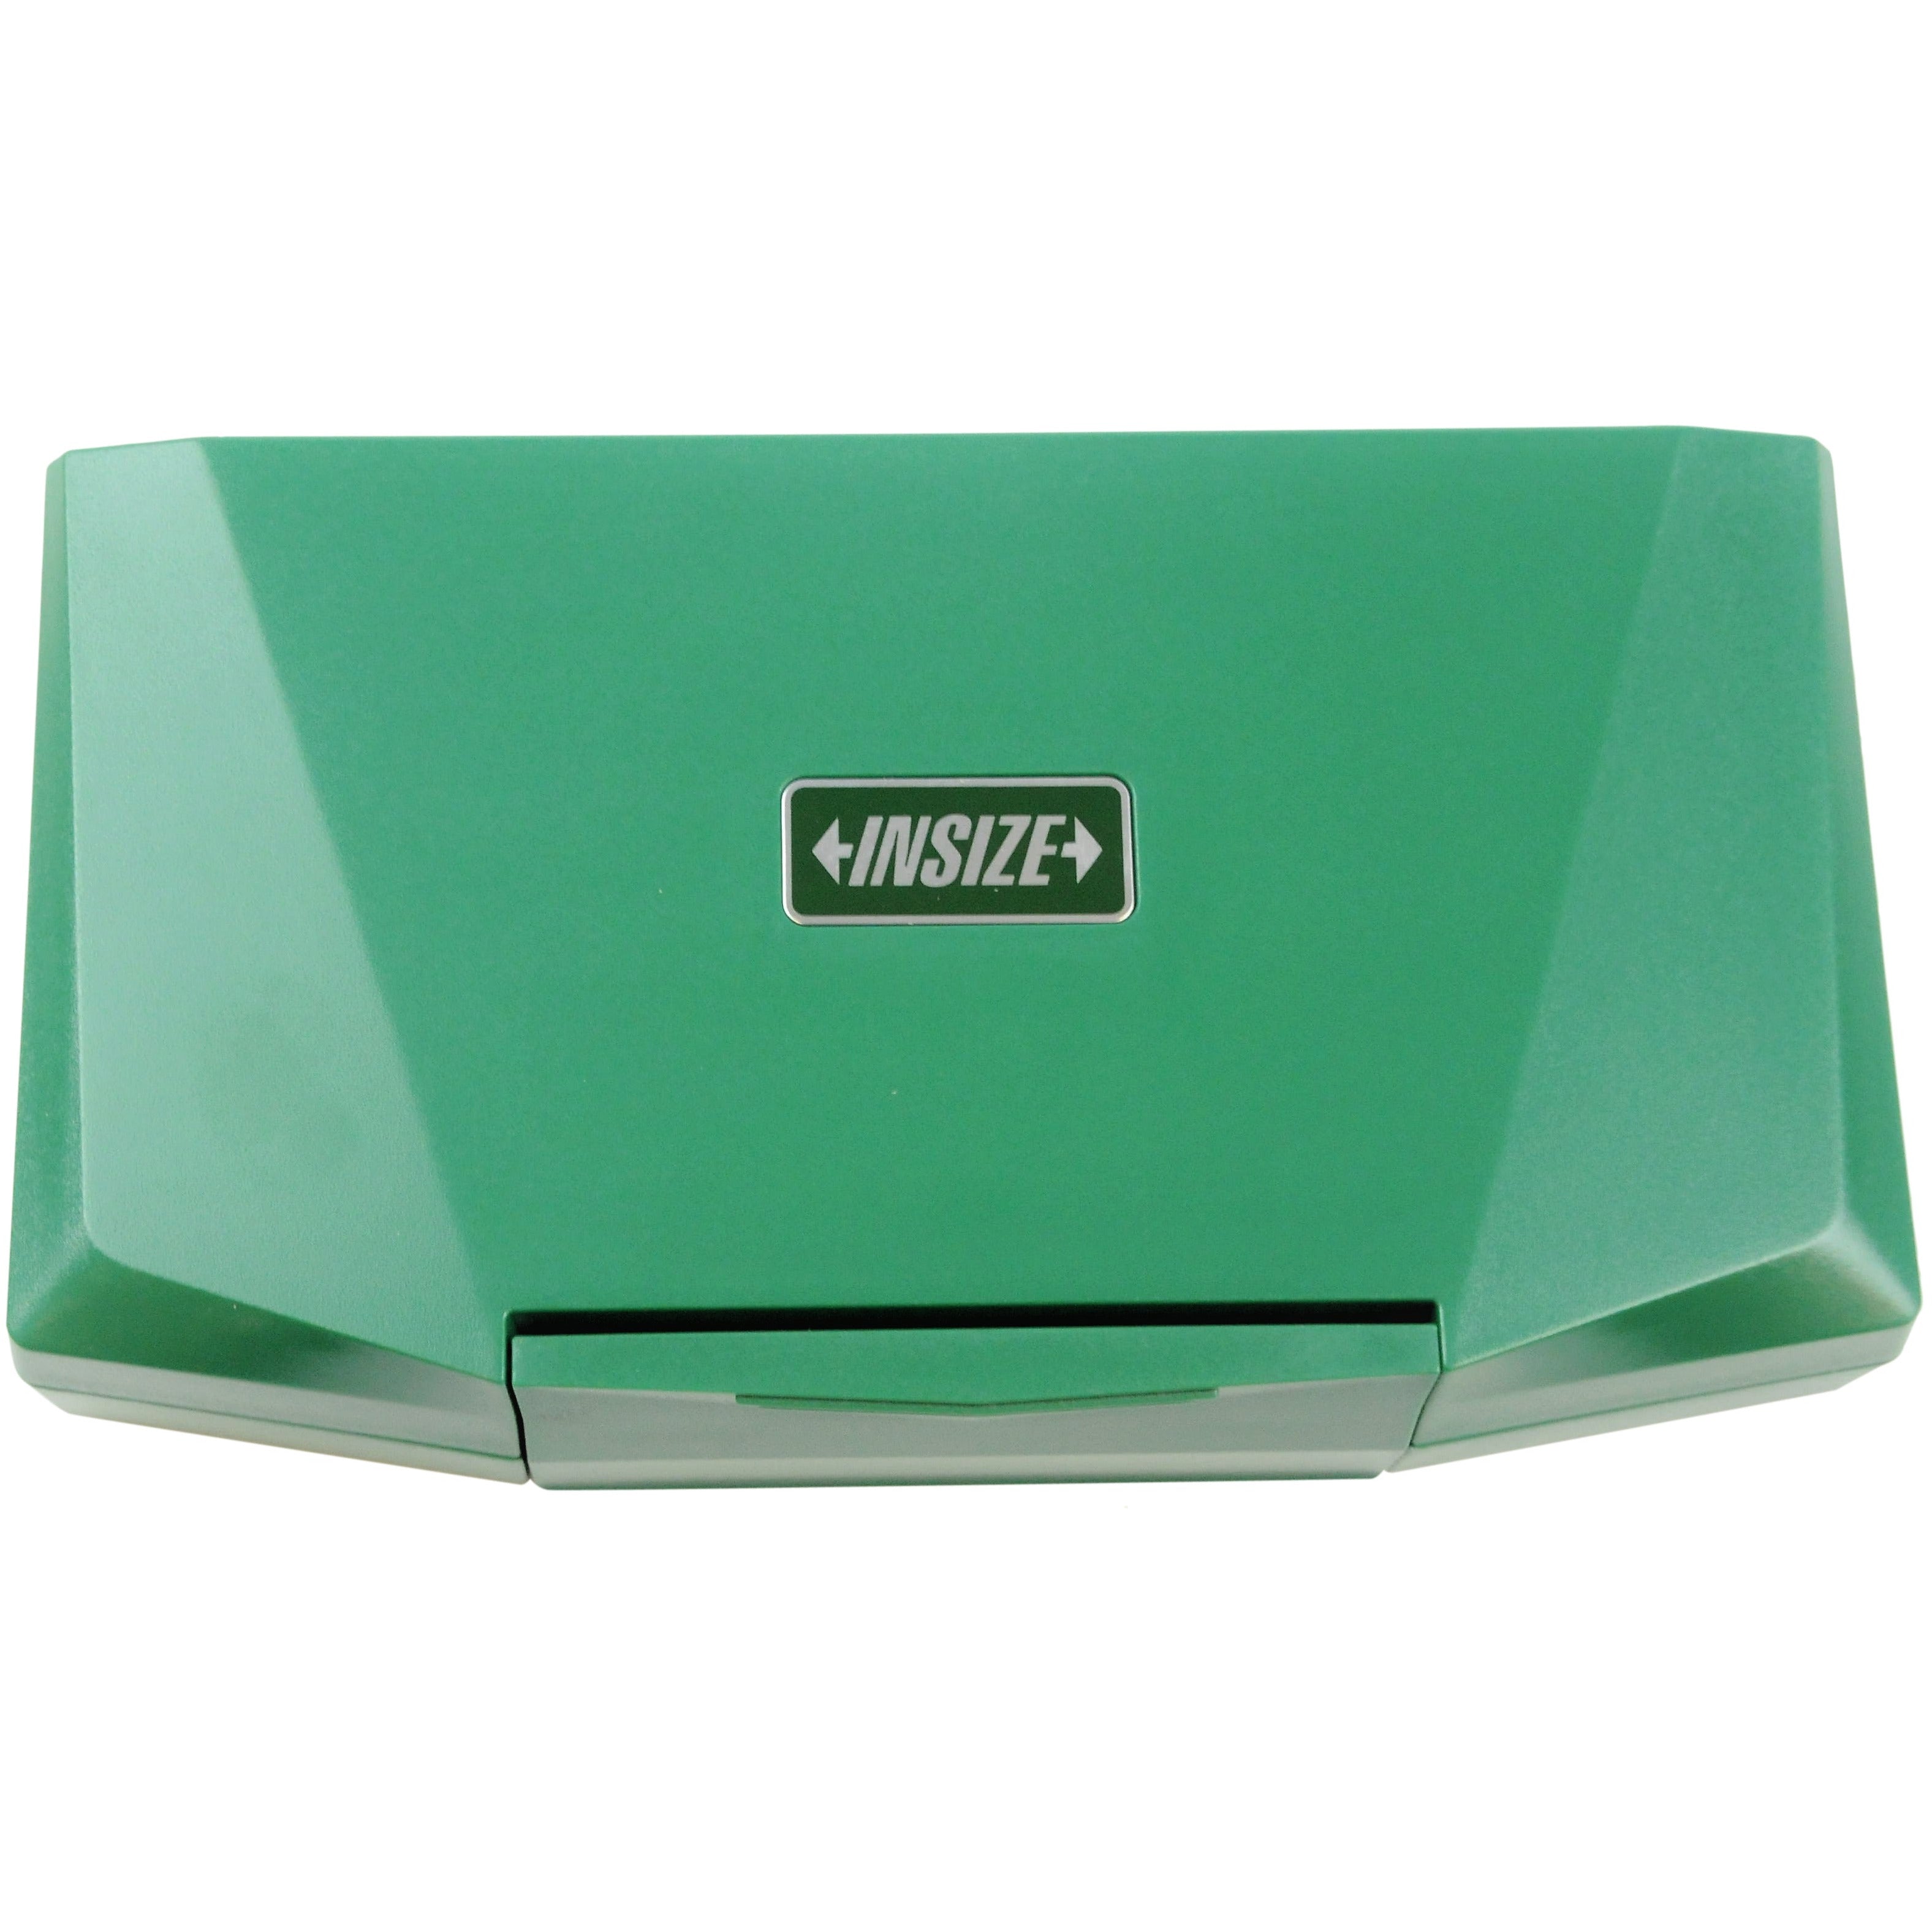 Insize Digital Outside Micrometer 25-50MM / 1-2" Range Series 3109-25A